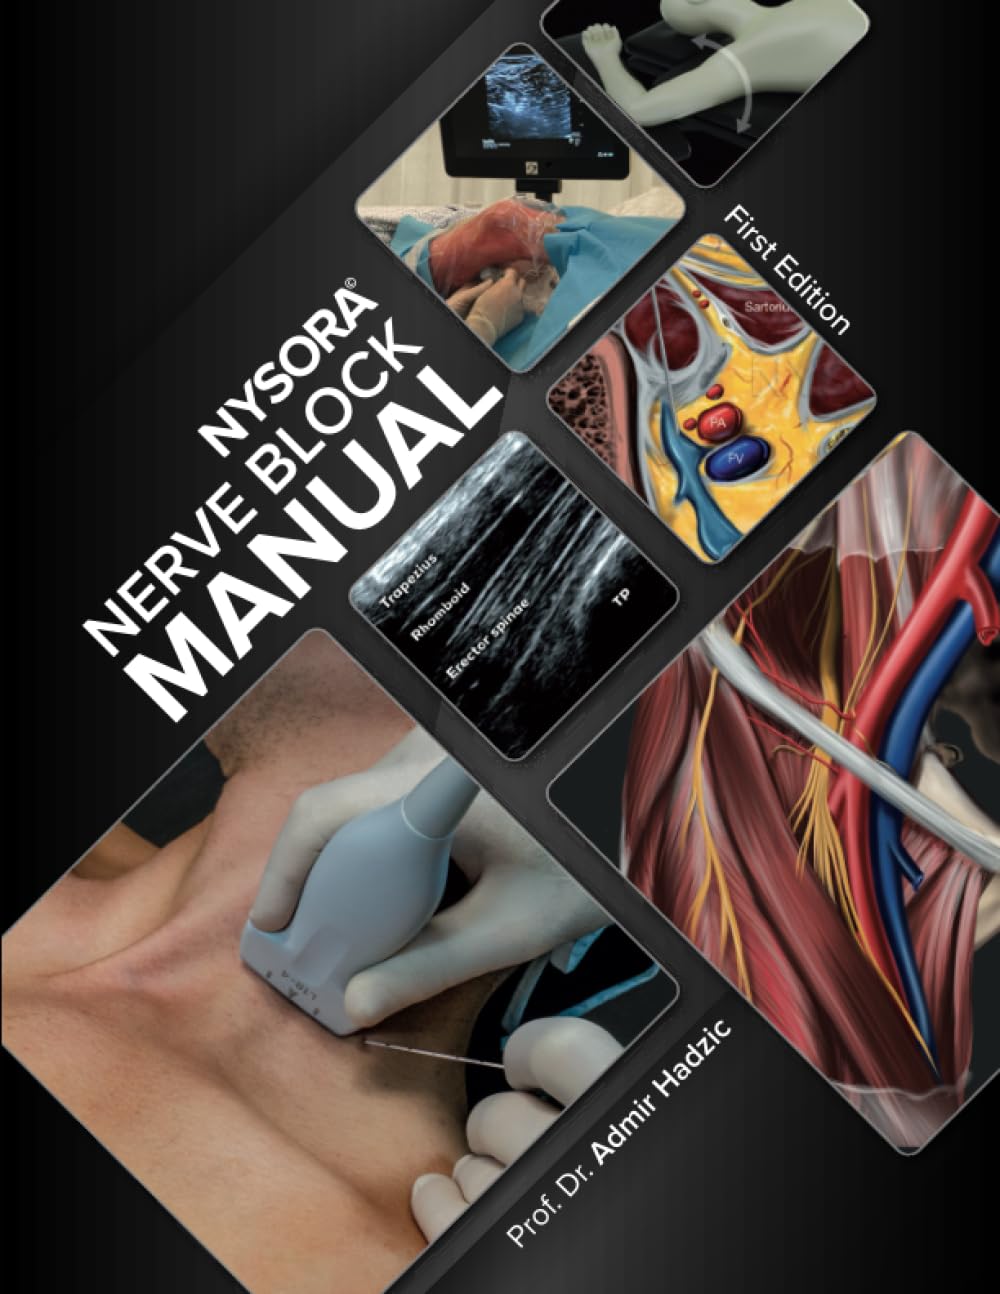 NYSORA Nerve Block Manual (Original PDF From Publisher)